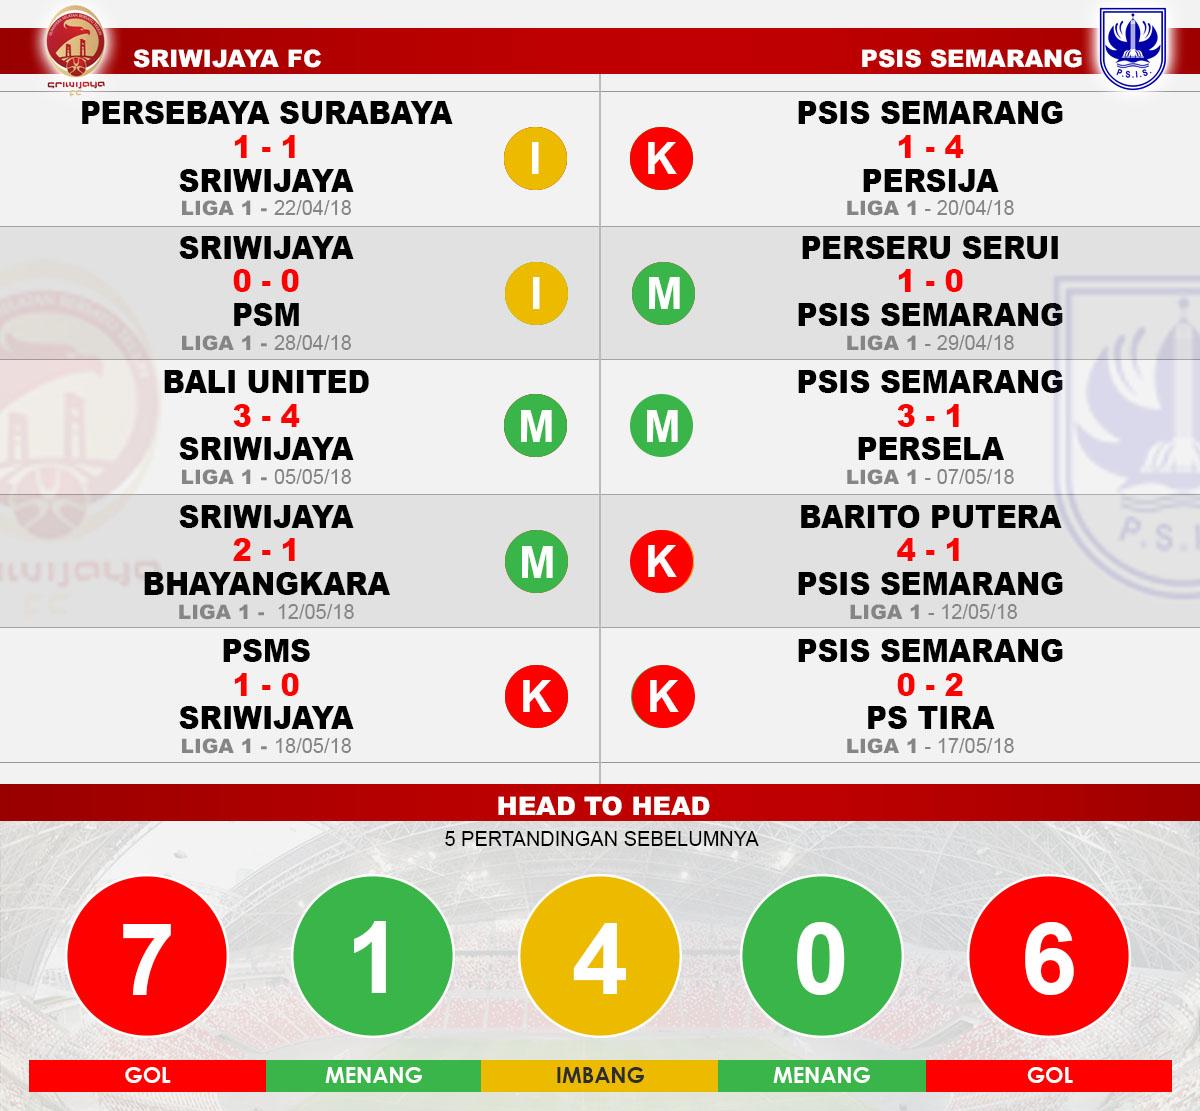 Sriwijaya Fc vs Psis Semarang Copyright: Indosport.com